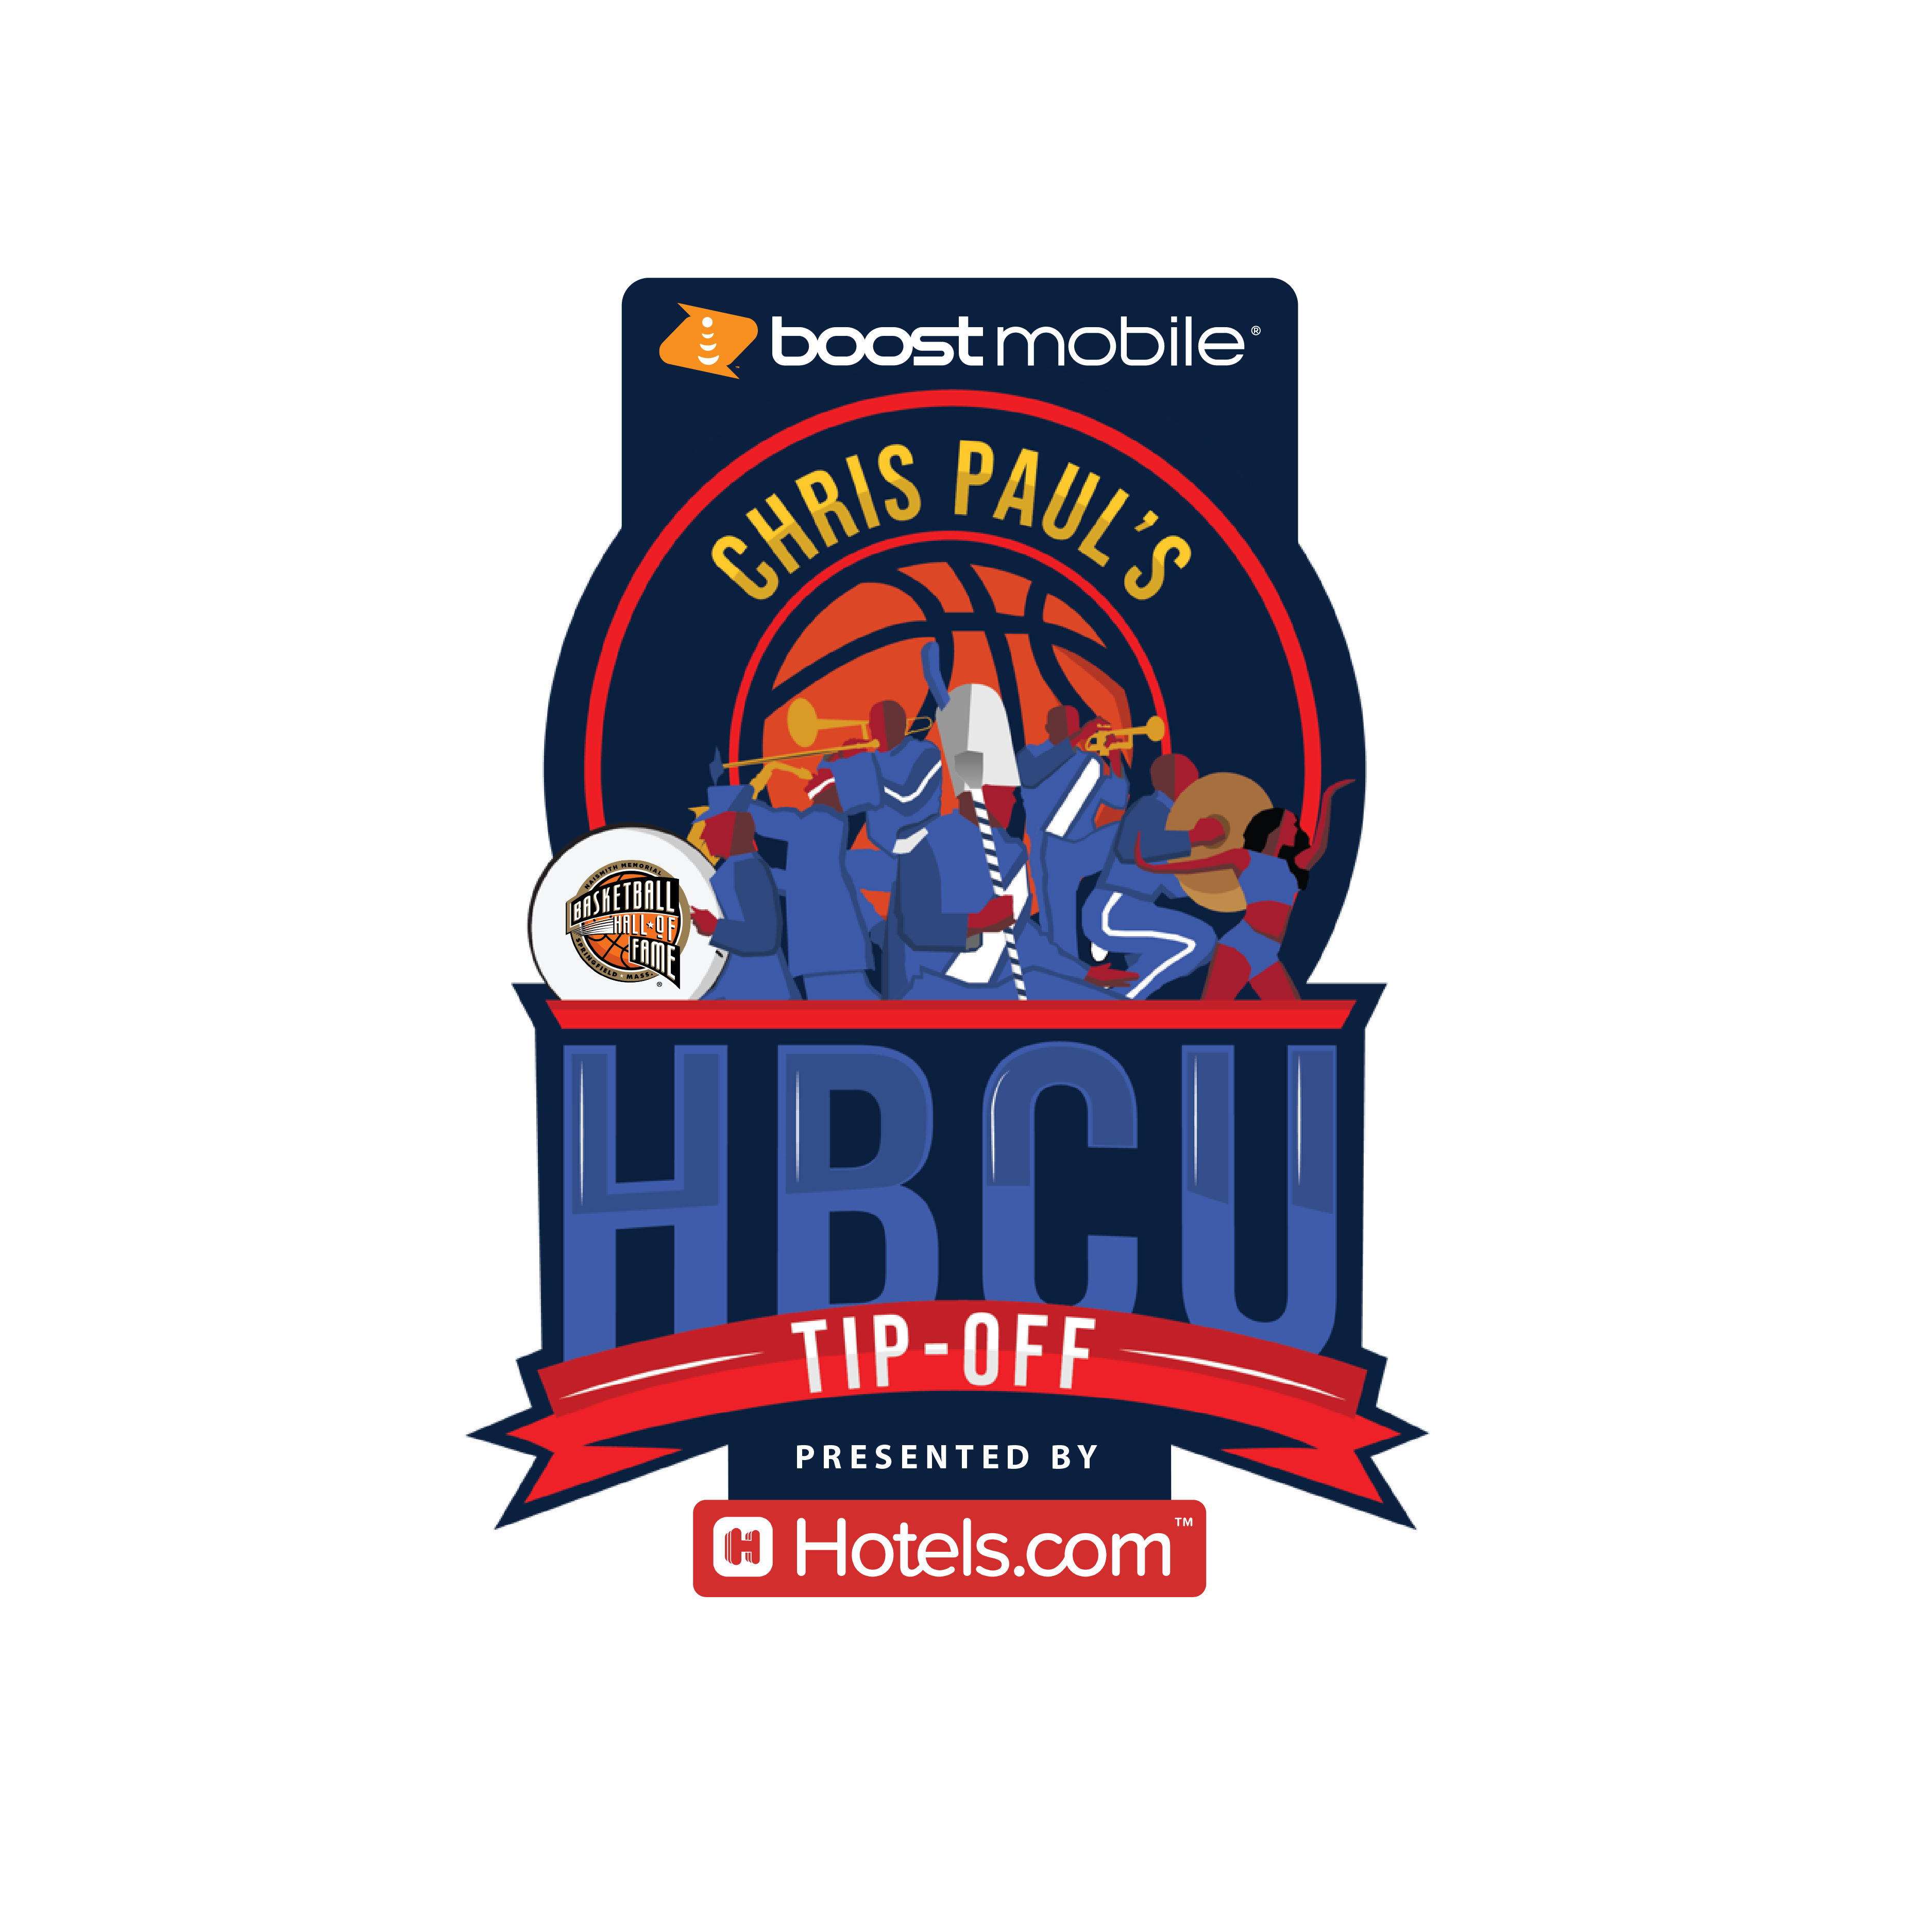 Chris Paul HBCU Tip-Off Event Logo